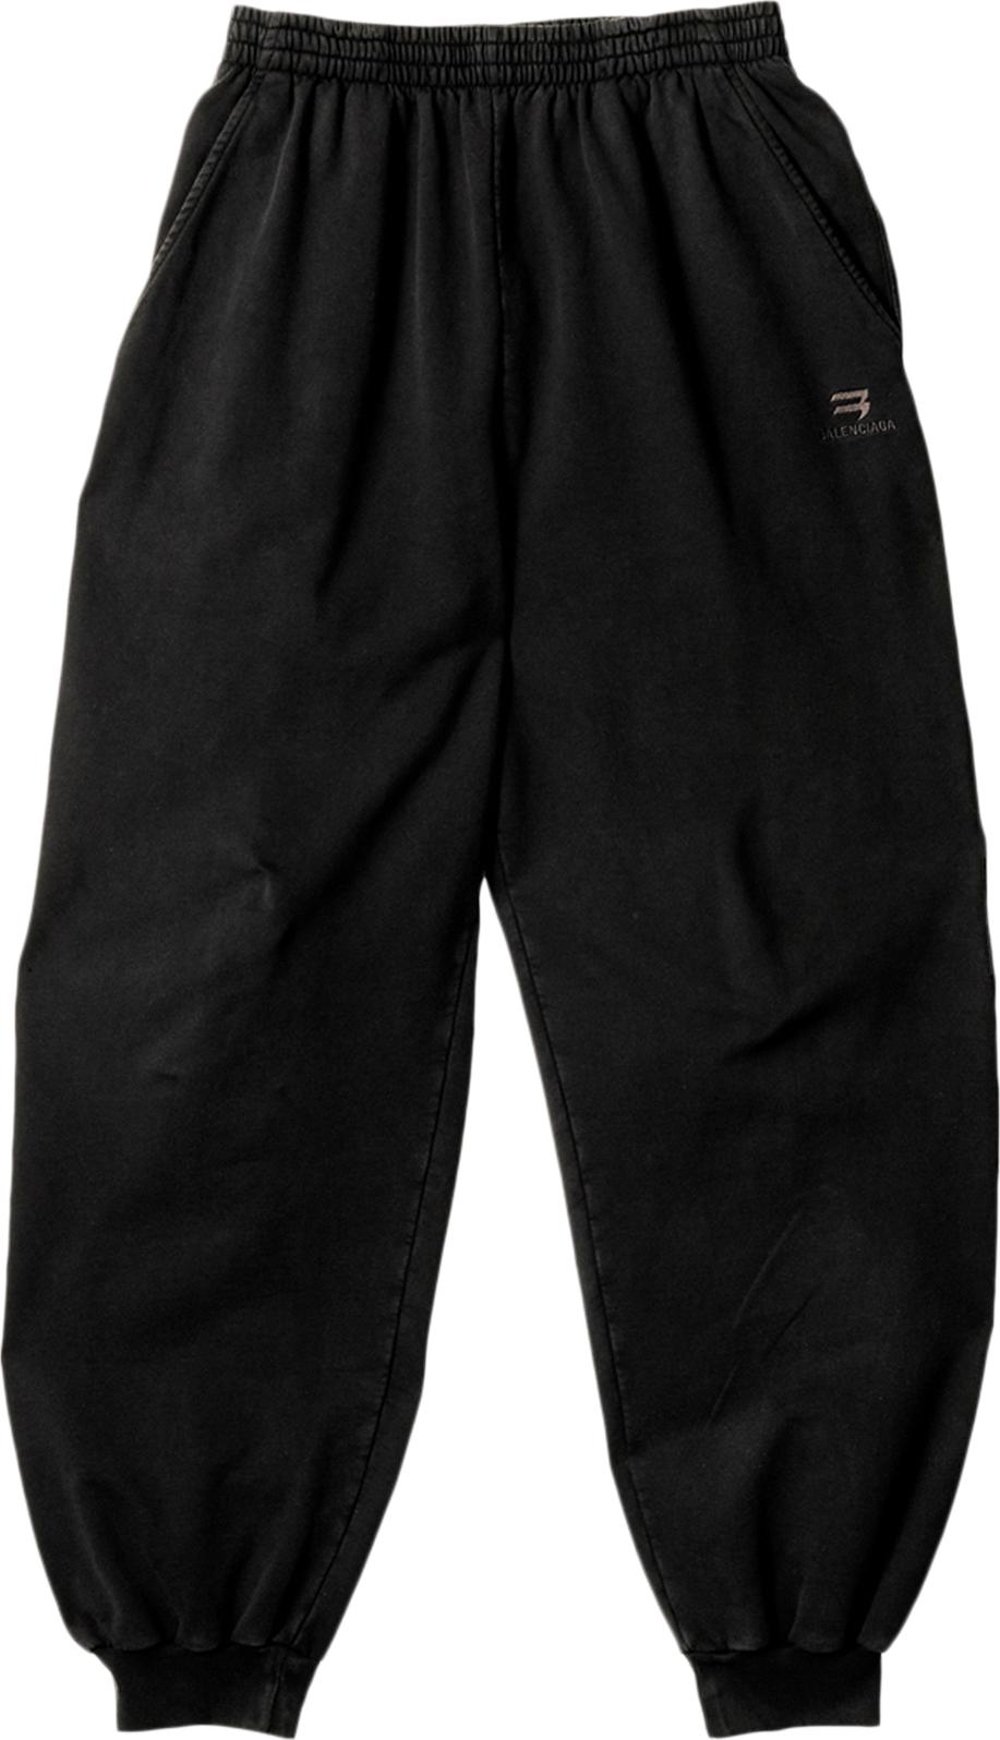 Buy Balenciaga Sweatpants New Sporty B 'Black' - 720502 TNVF6 1069 | GOAT